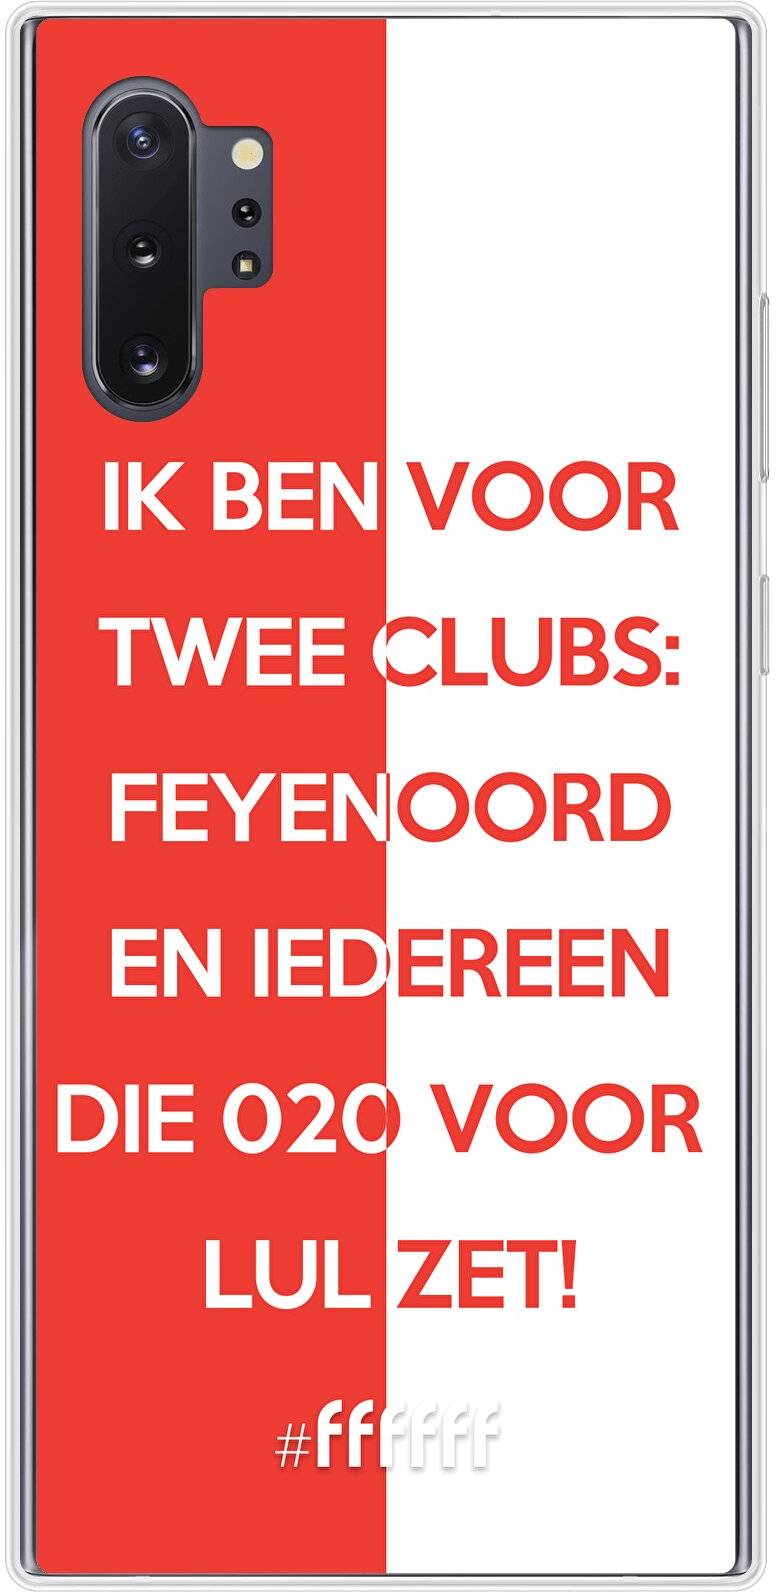 Feyenoord - Quote Galaxy Note 10 Plus